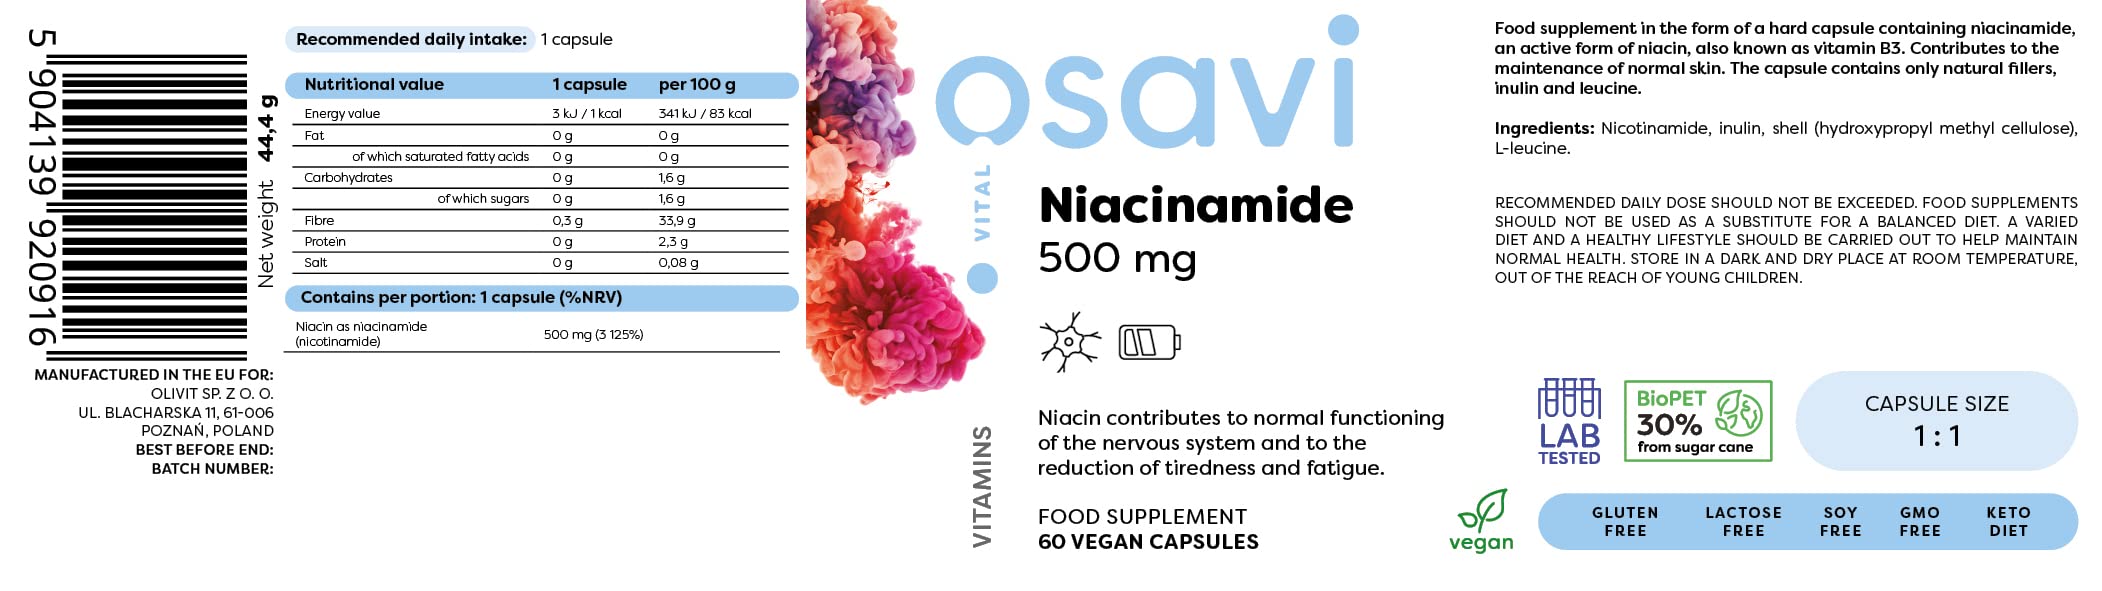 Osavi Niacinamide, 500mg - 60 vegan caps | High-Quality Combination Multivitamins & Minerals | MySupplementShop.co.uk